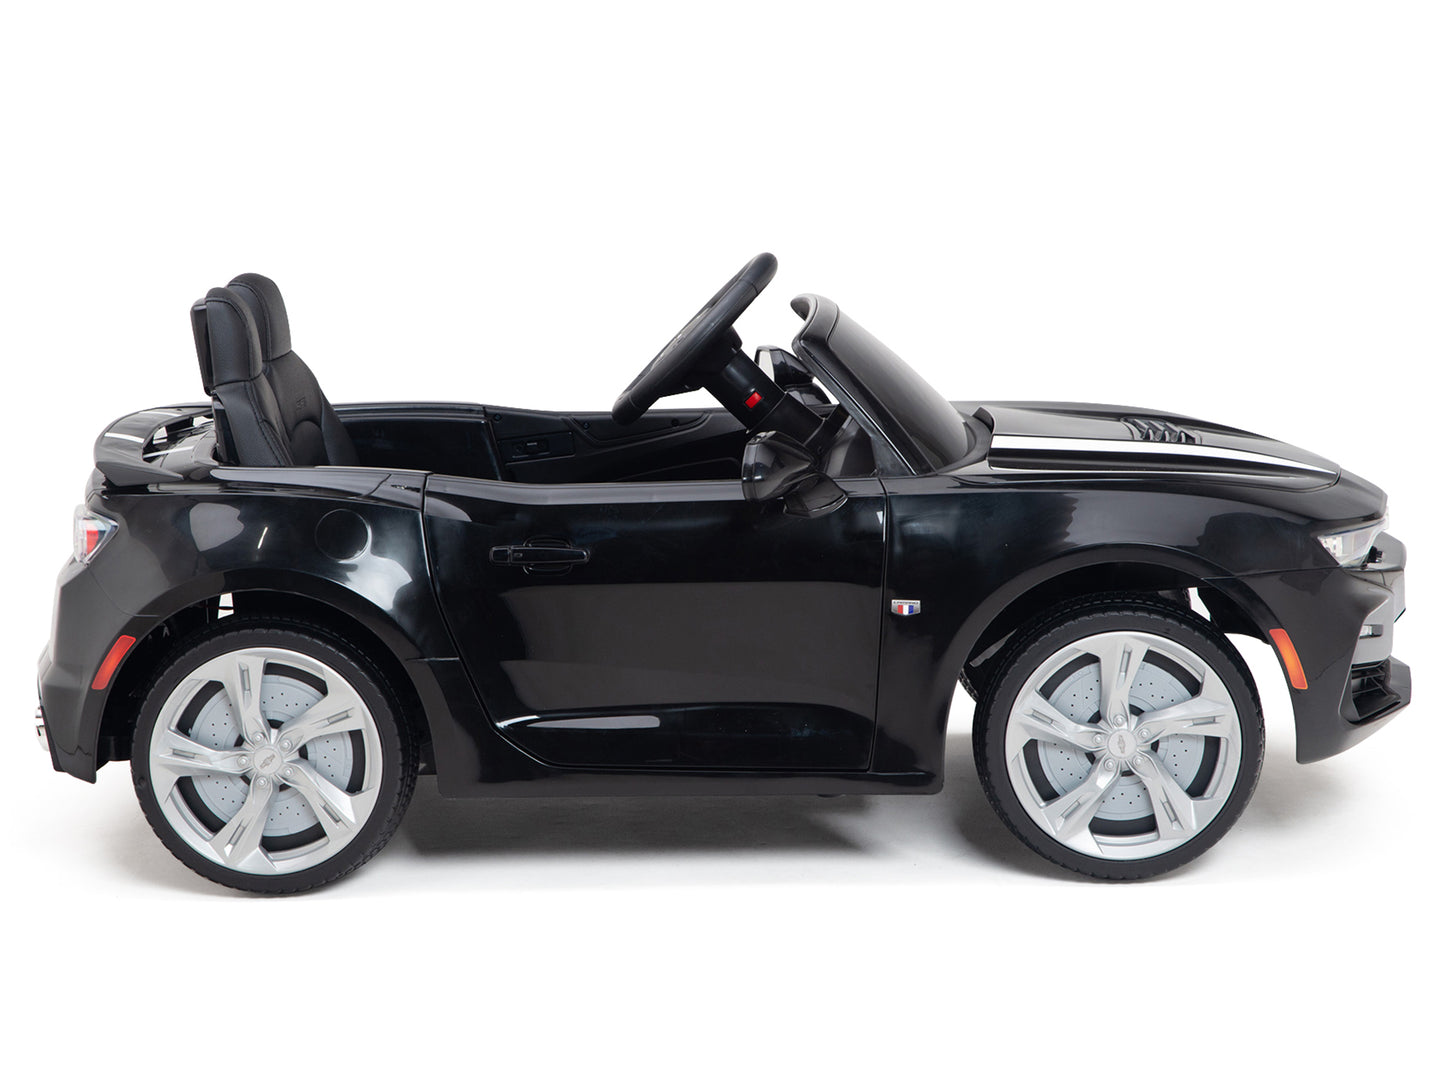 12V Chevrolet Camaro 2SS Kids Ride On Car with Remote Control - Black